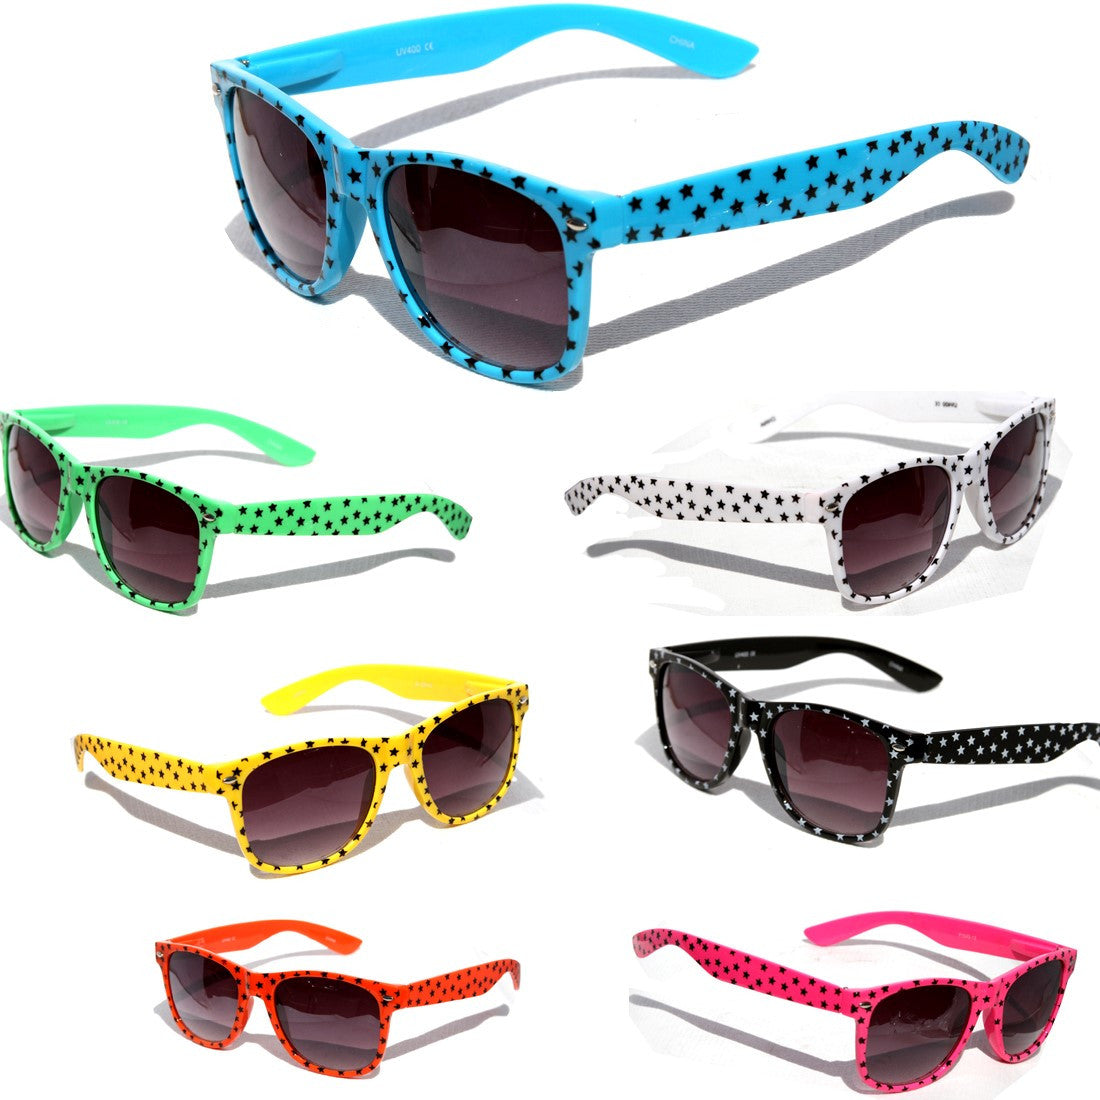 Stars Print Design Pattern Classic Sunglasses #P1543-13 - wholesalesunglasses.net